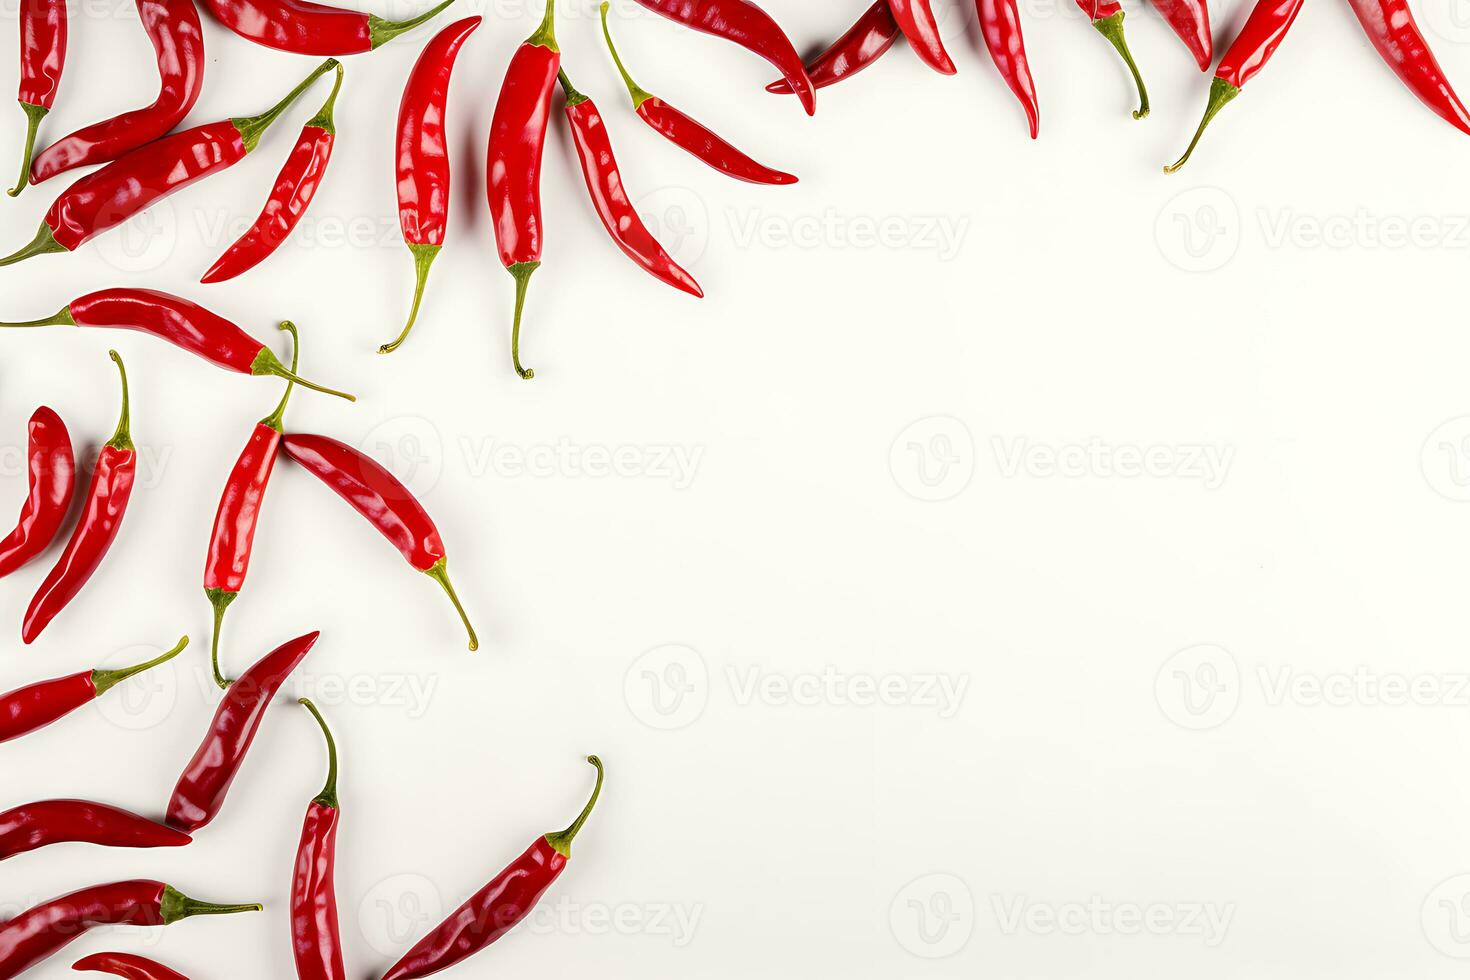 röd torkades chili paprikor topp se med kopia Plats på vit yta foto